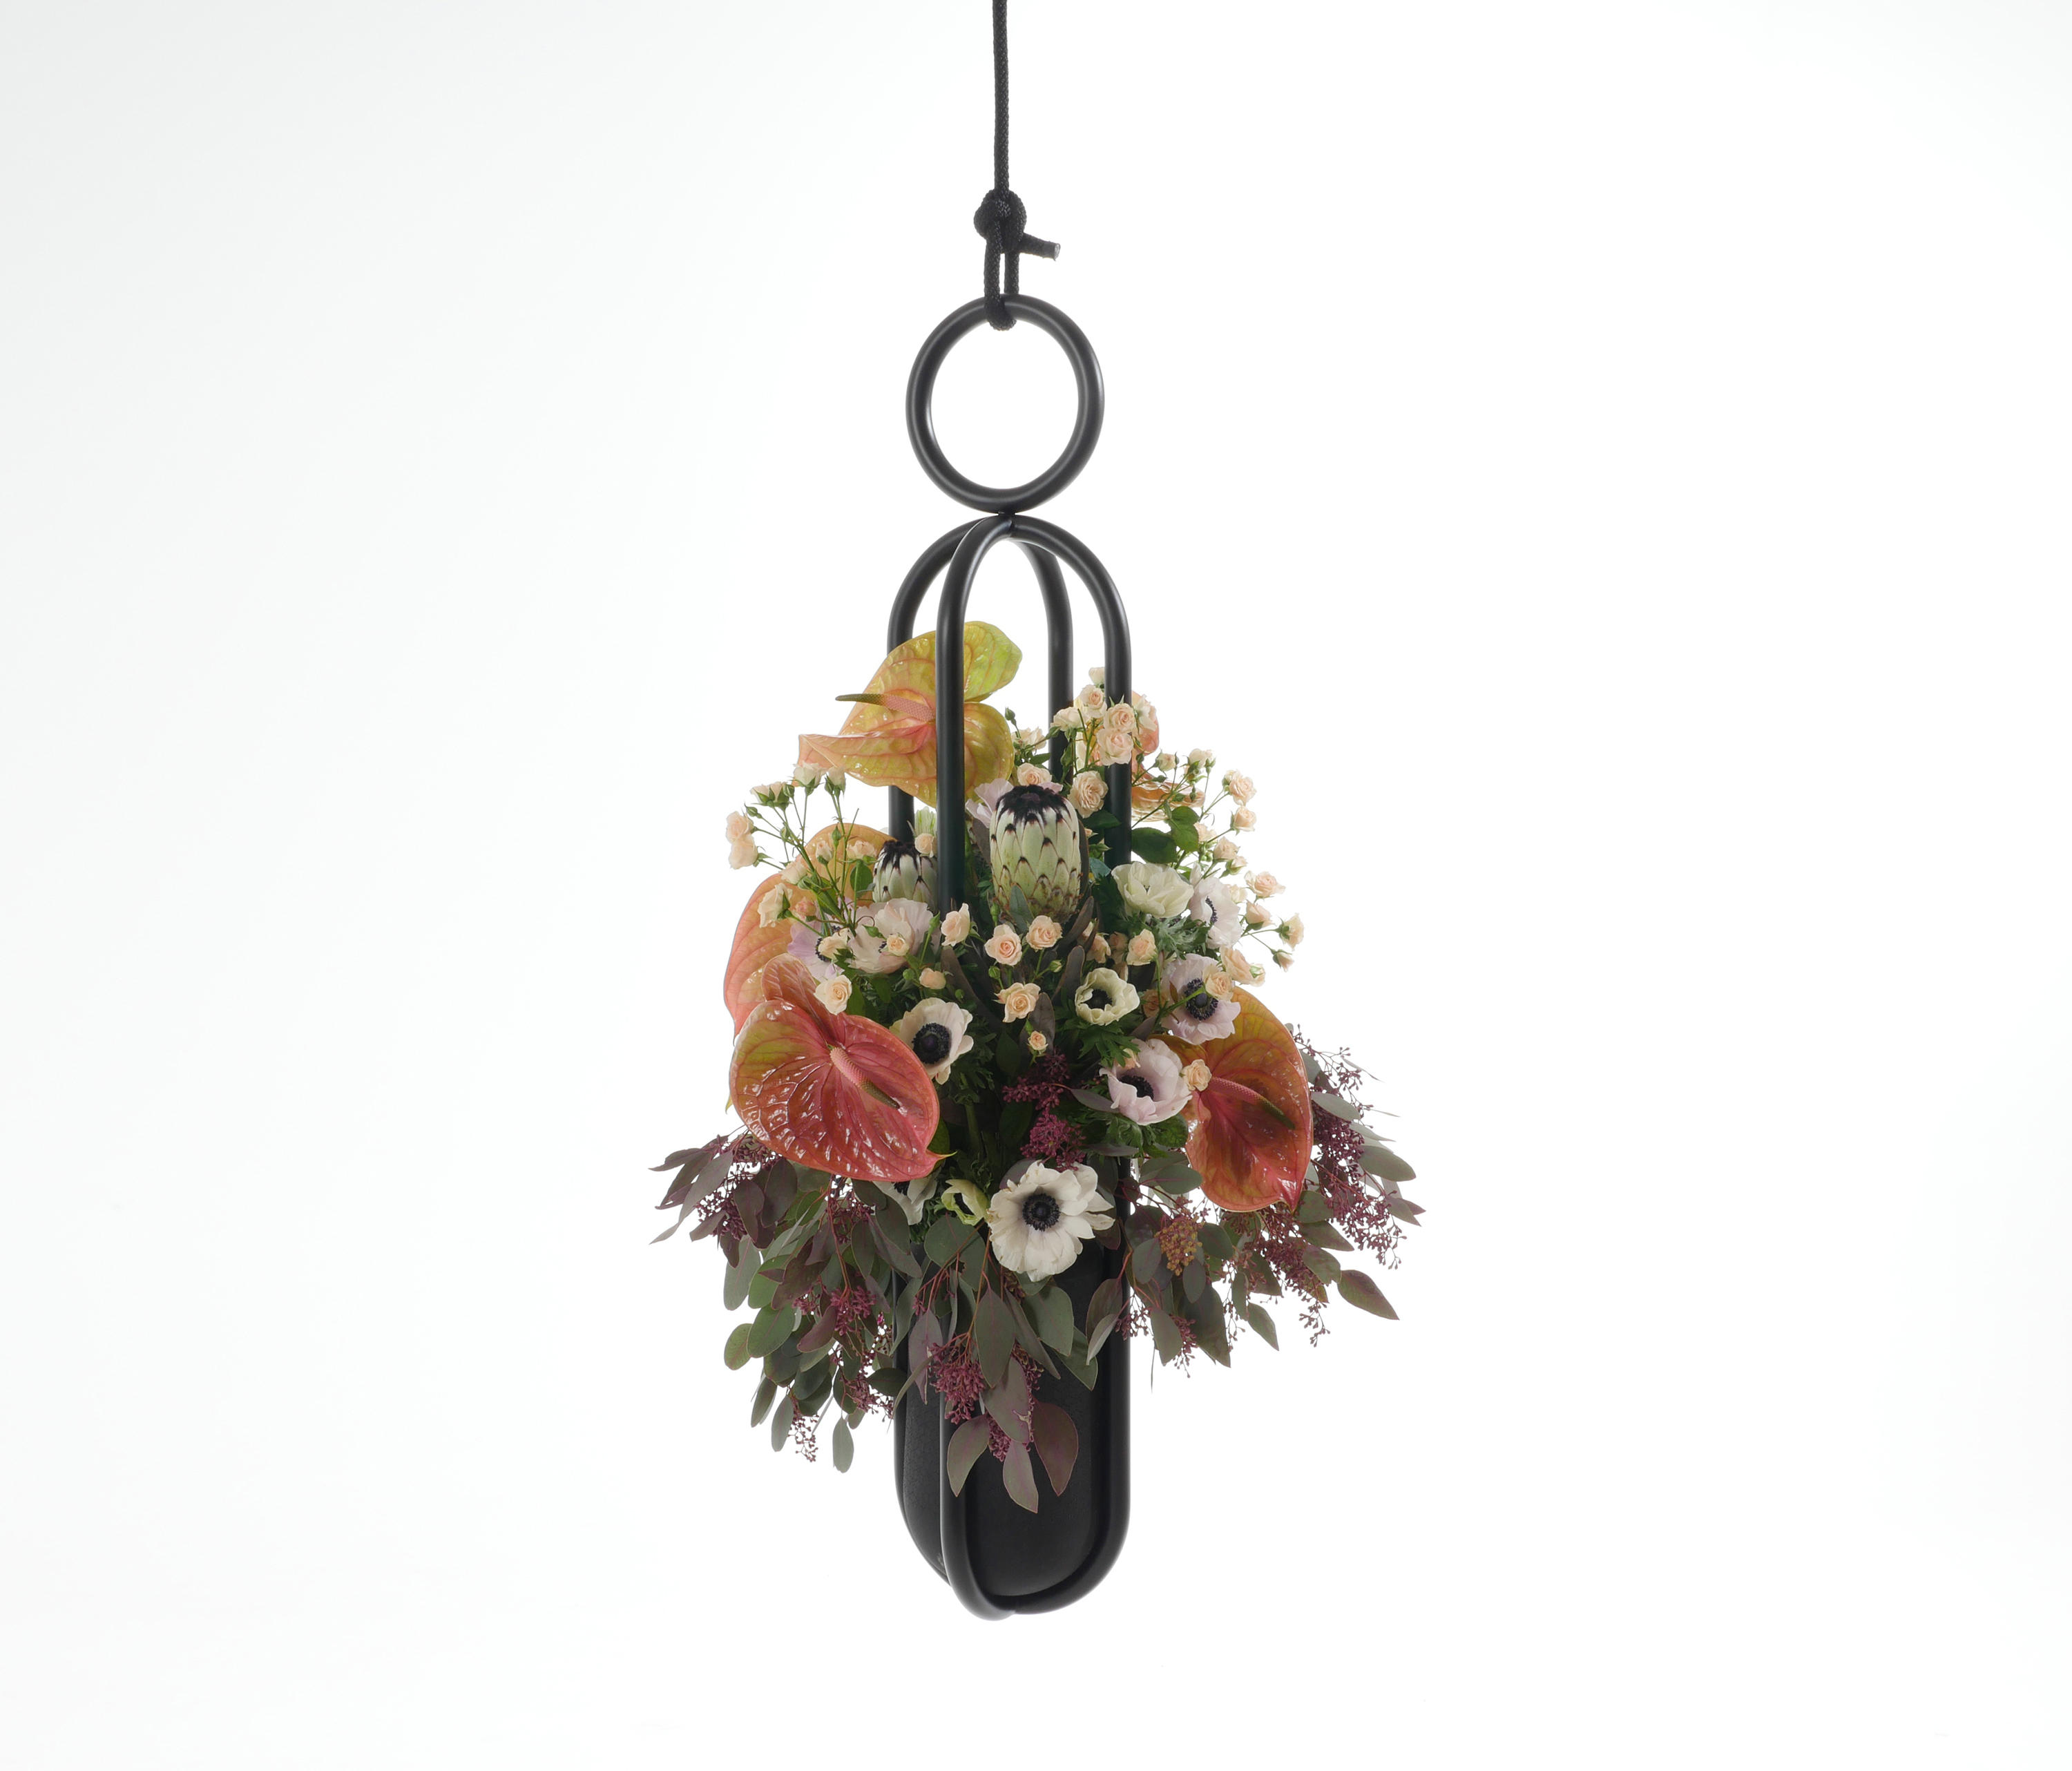 Blumenampel Edition hanging room object | Architonic